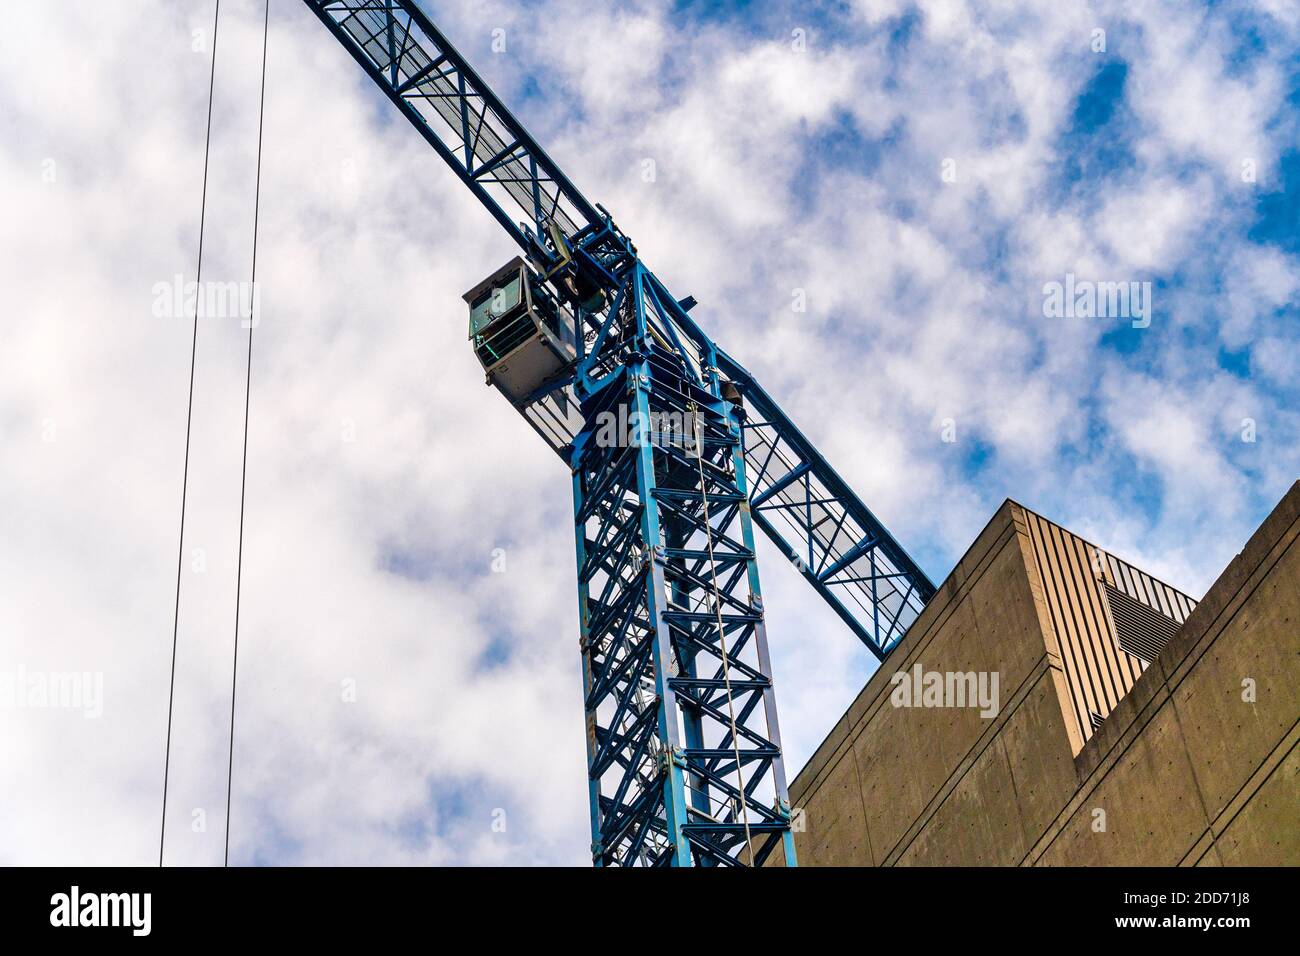 Construction crane in a construction site, Montreal, Canada Stock Photo